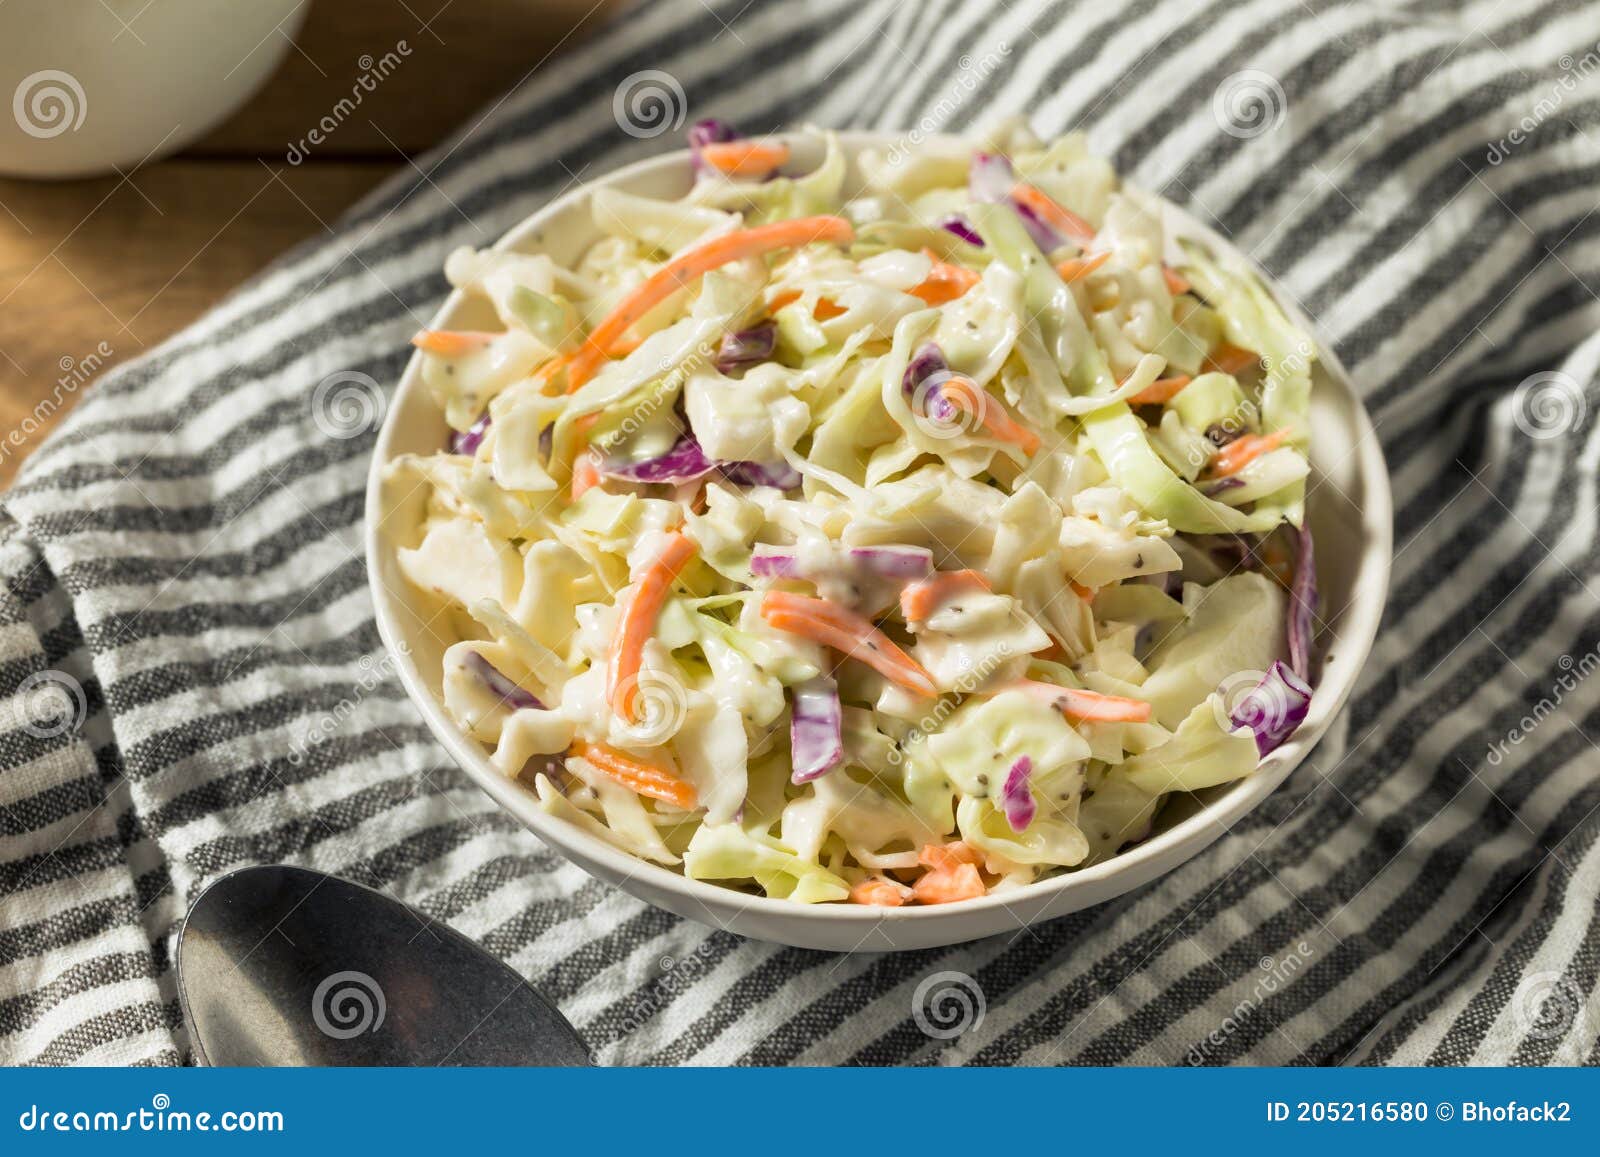 homemade creamy cabbage coleslaw